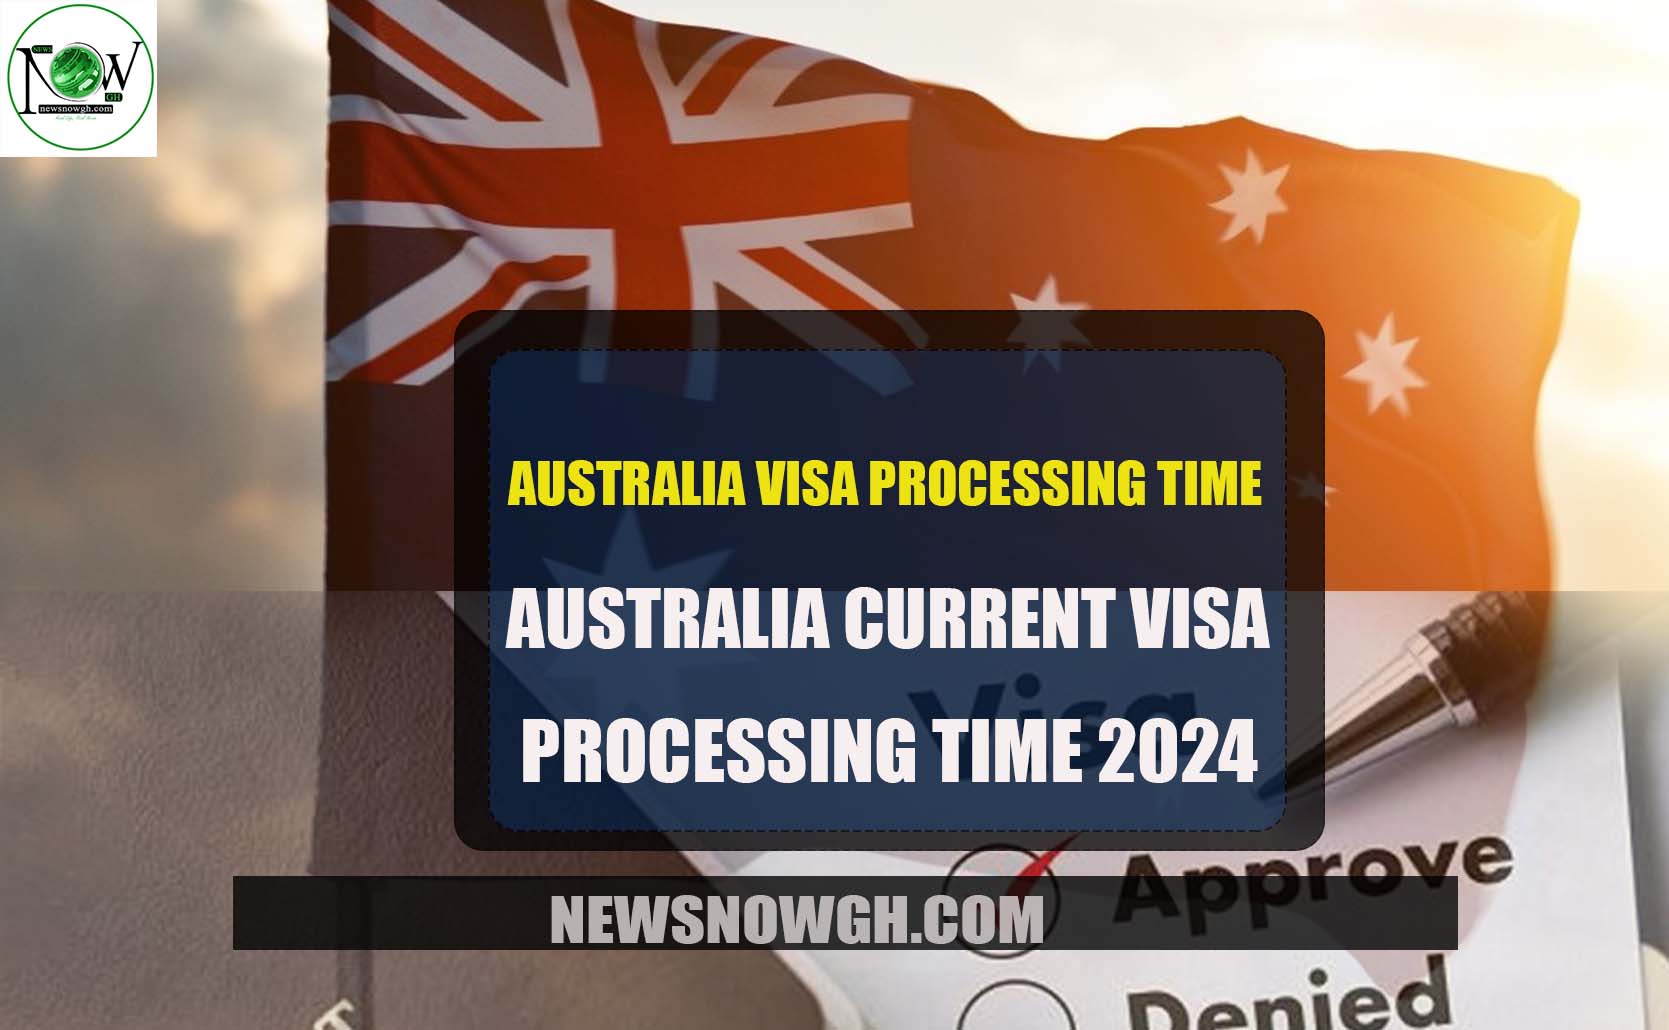 Australia Current Visa Processing Time 2024 Visa Processing